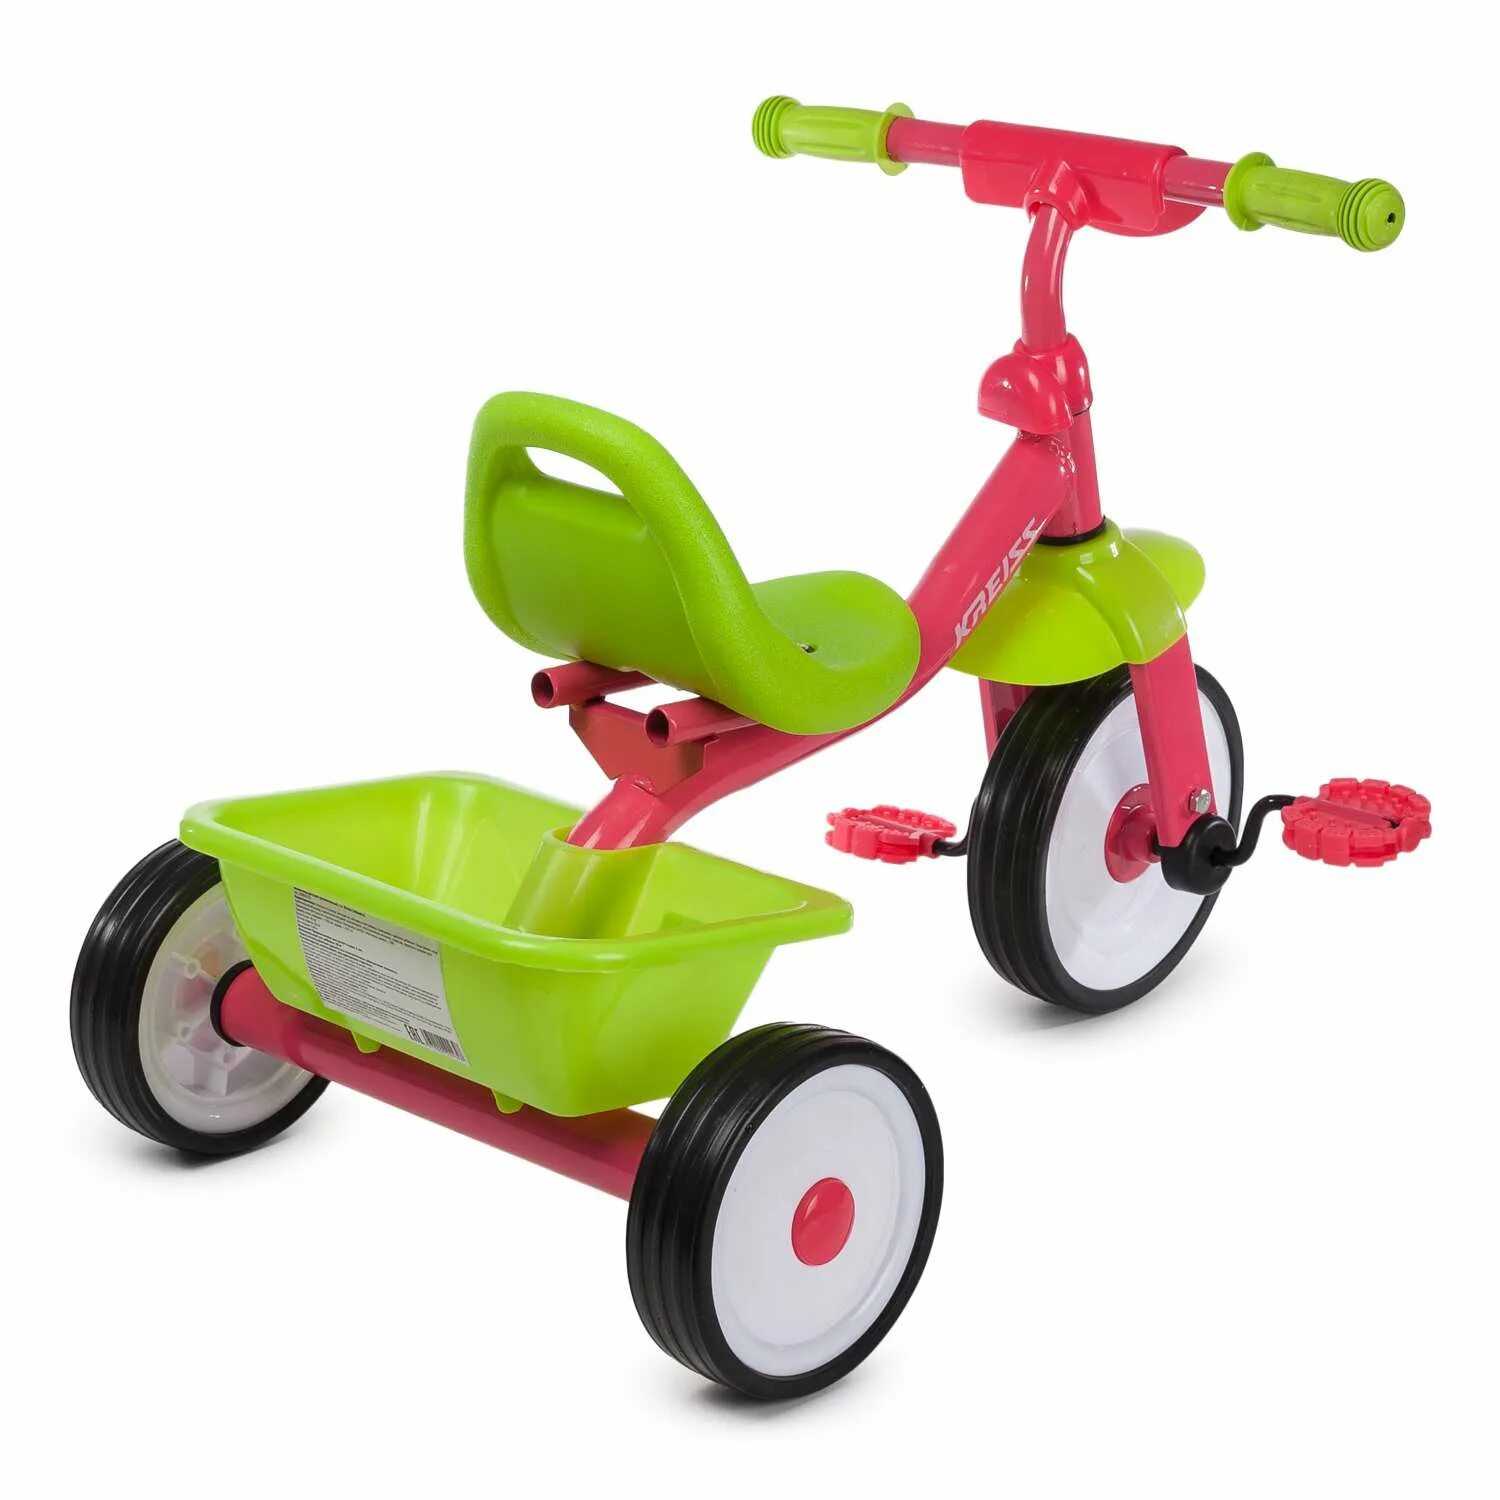 Велосипед kreiss 326 1. Детский велосипед Kreiss трехколесный. Трехколесный велосипед Kreiss зеленый. Kreiss велосипед трехколесный розовый. Велосипед детский Kreiss 326 трехколесный.